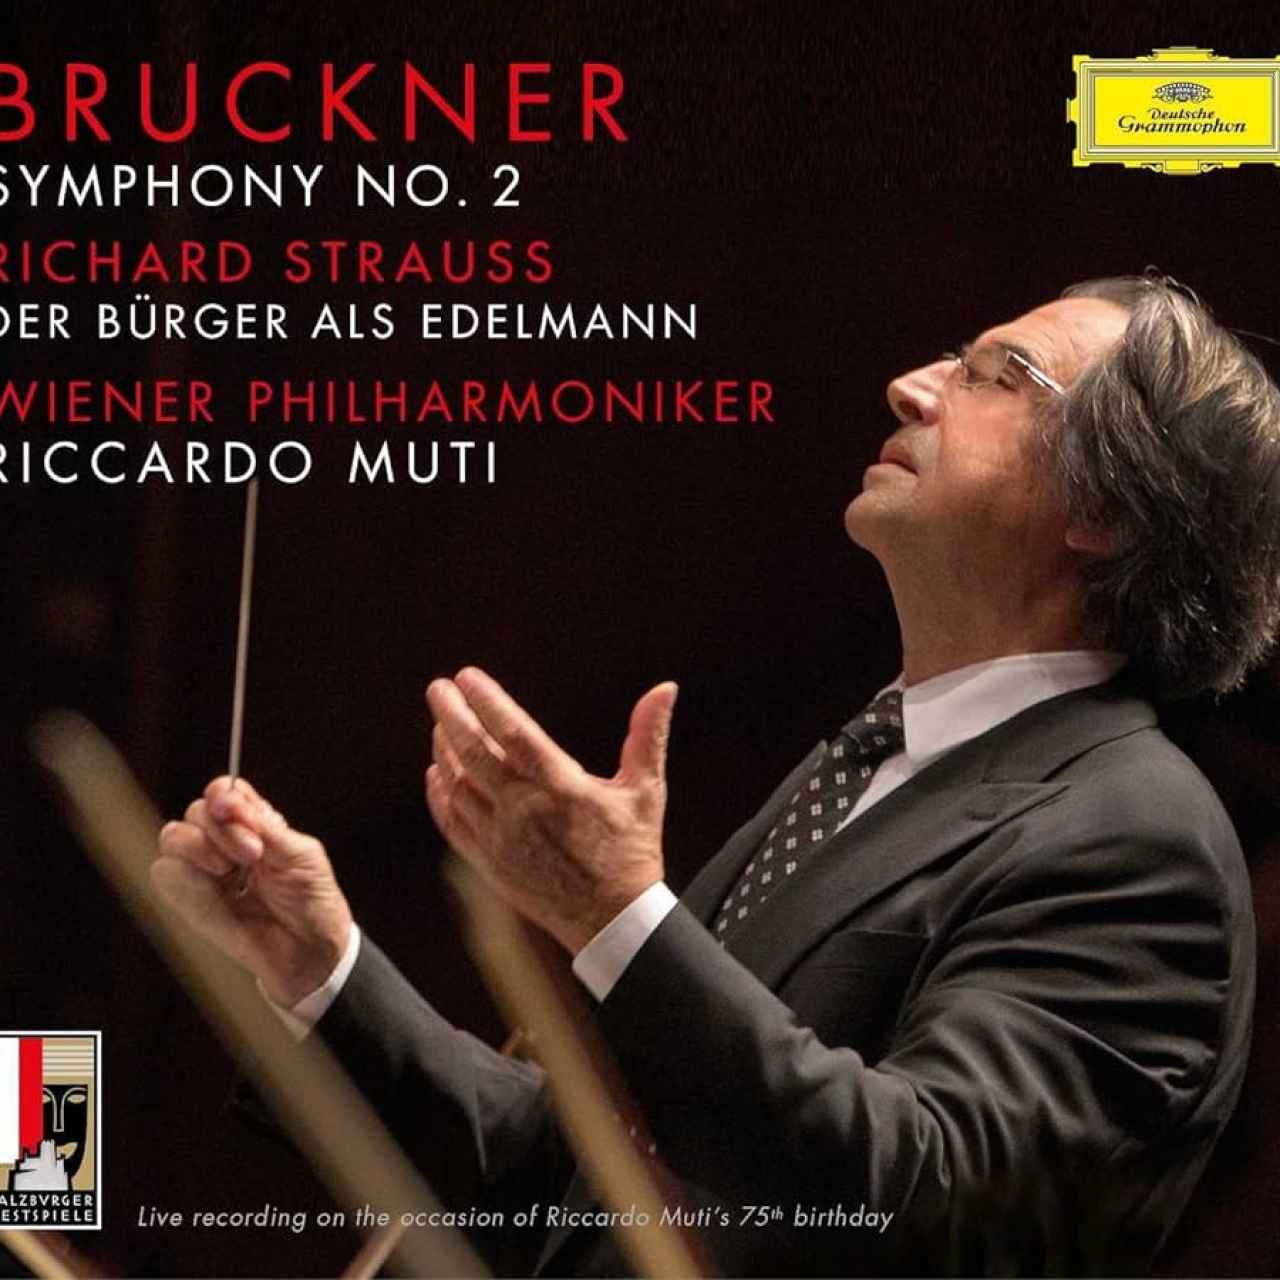 Grabación de Bruckner de Riccardo Mutti